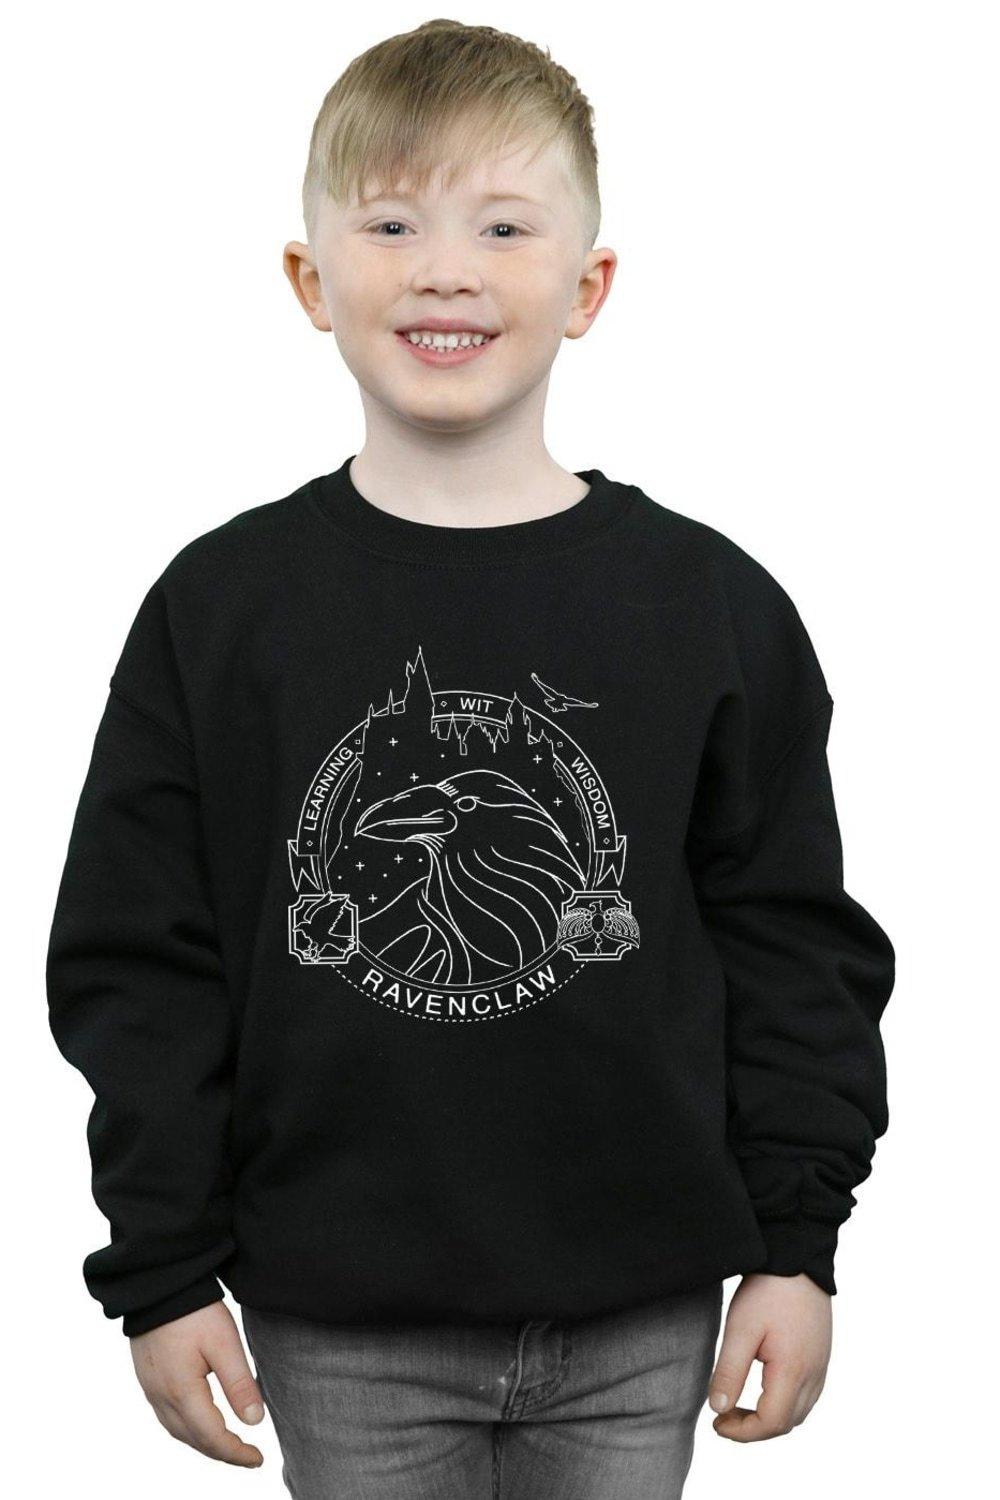 Ravenclaw Seal Sweatshirt